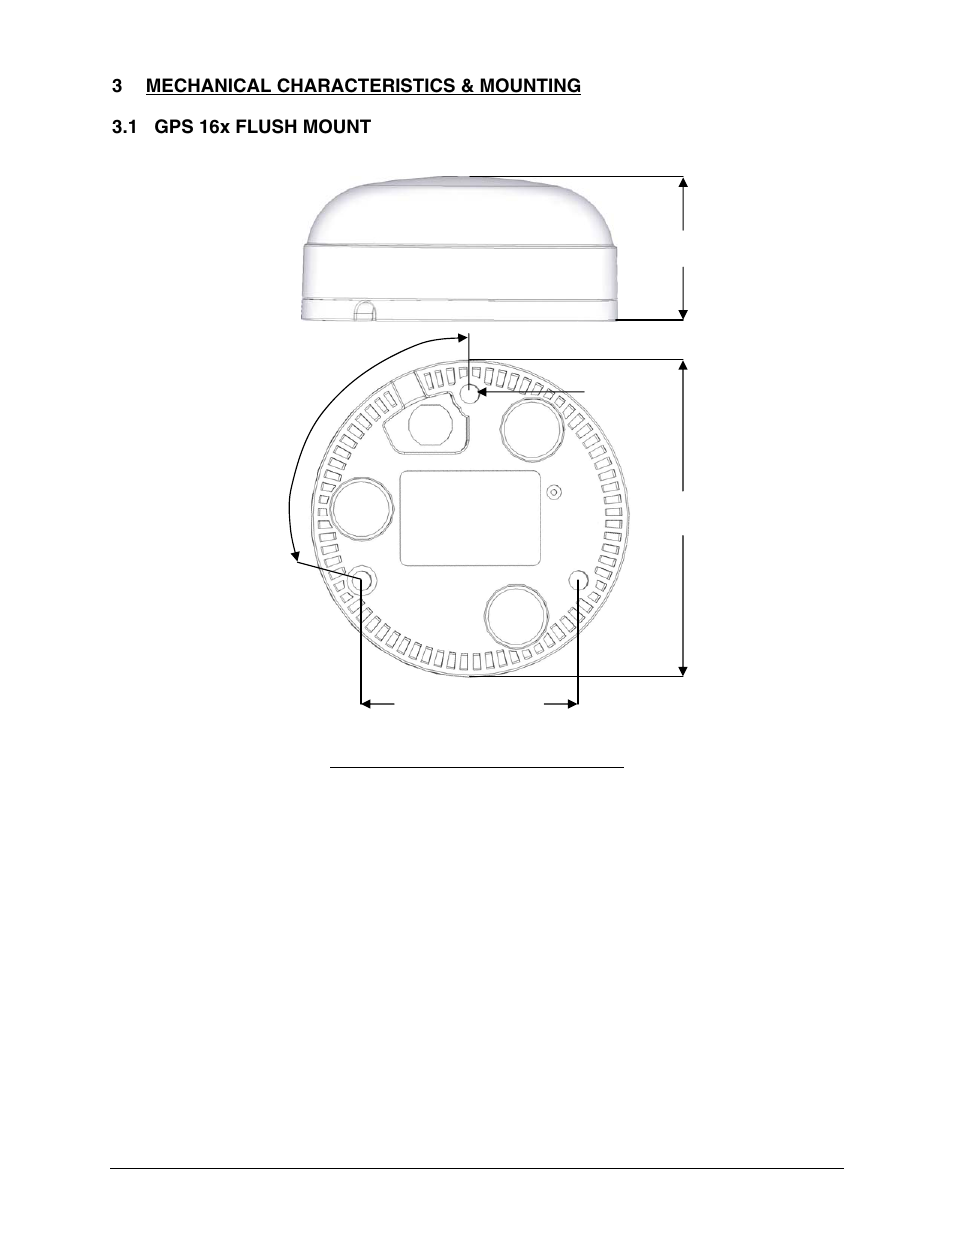 3 mechanical characteristics & mounting, Gps 16x flush mount, Figure 4: gps  16x flush mount dimensions | Garmin GPS 16x User Manual | Page 13 / 36